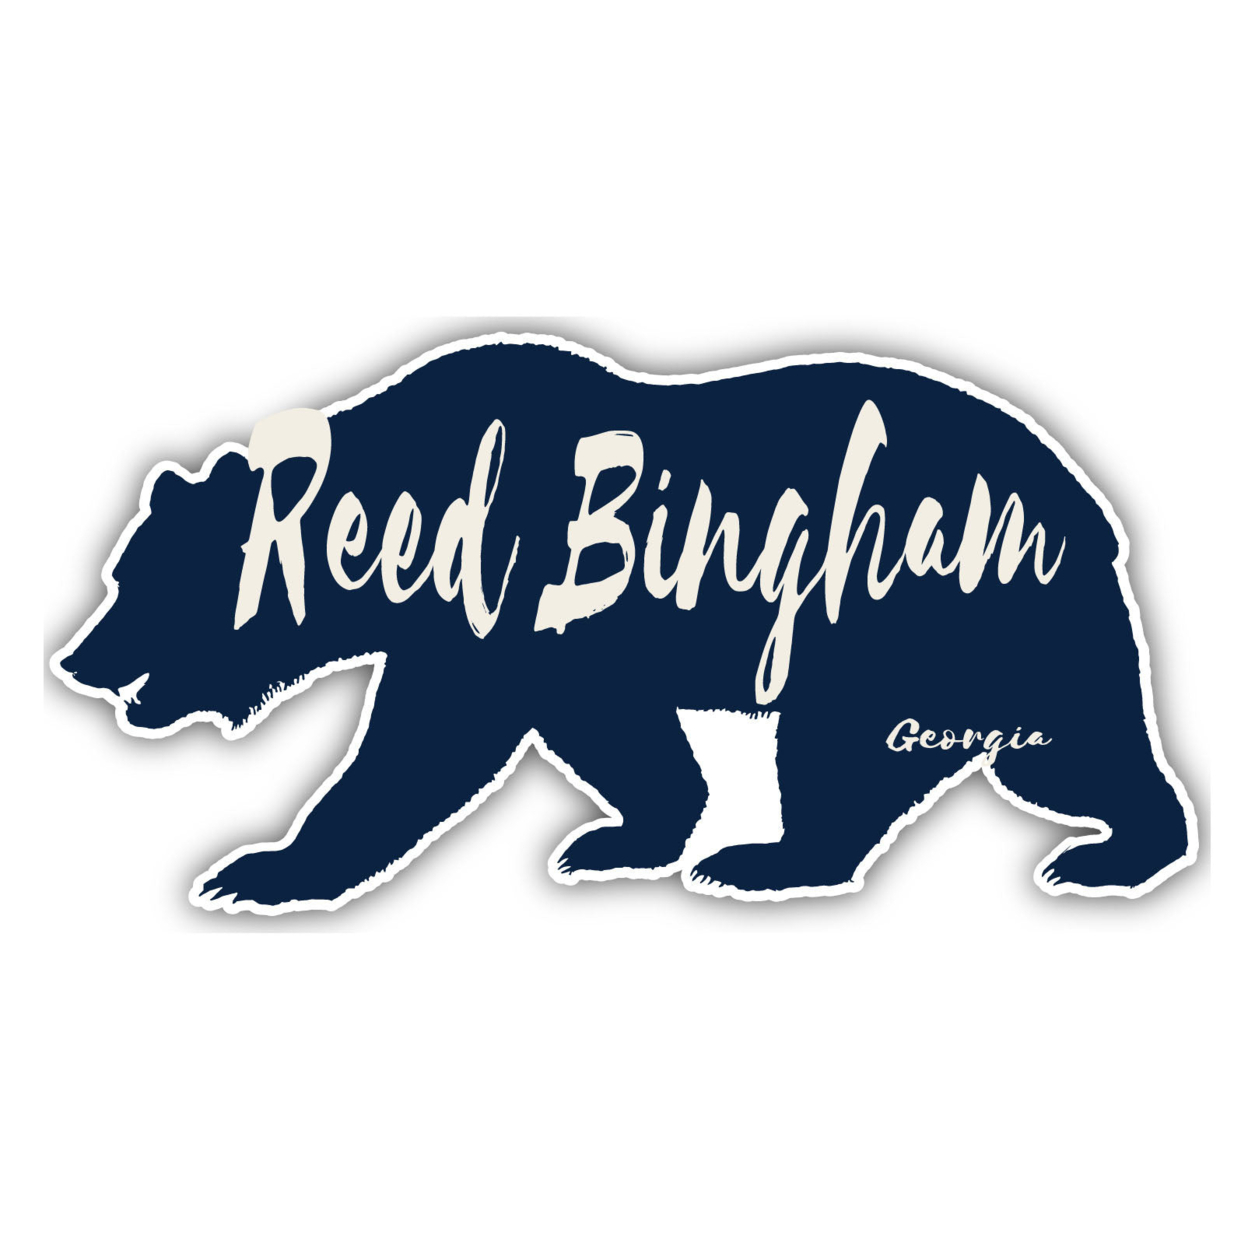 Reed Bingham Georgia Souvenir Decorative Stickers (Choose Theme And Size) - Single Unit, 4-Inch, Camp Life